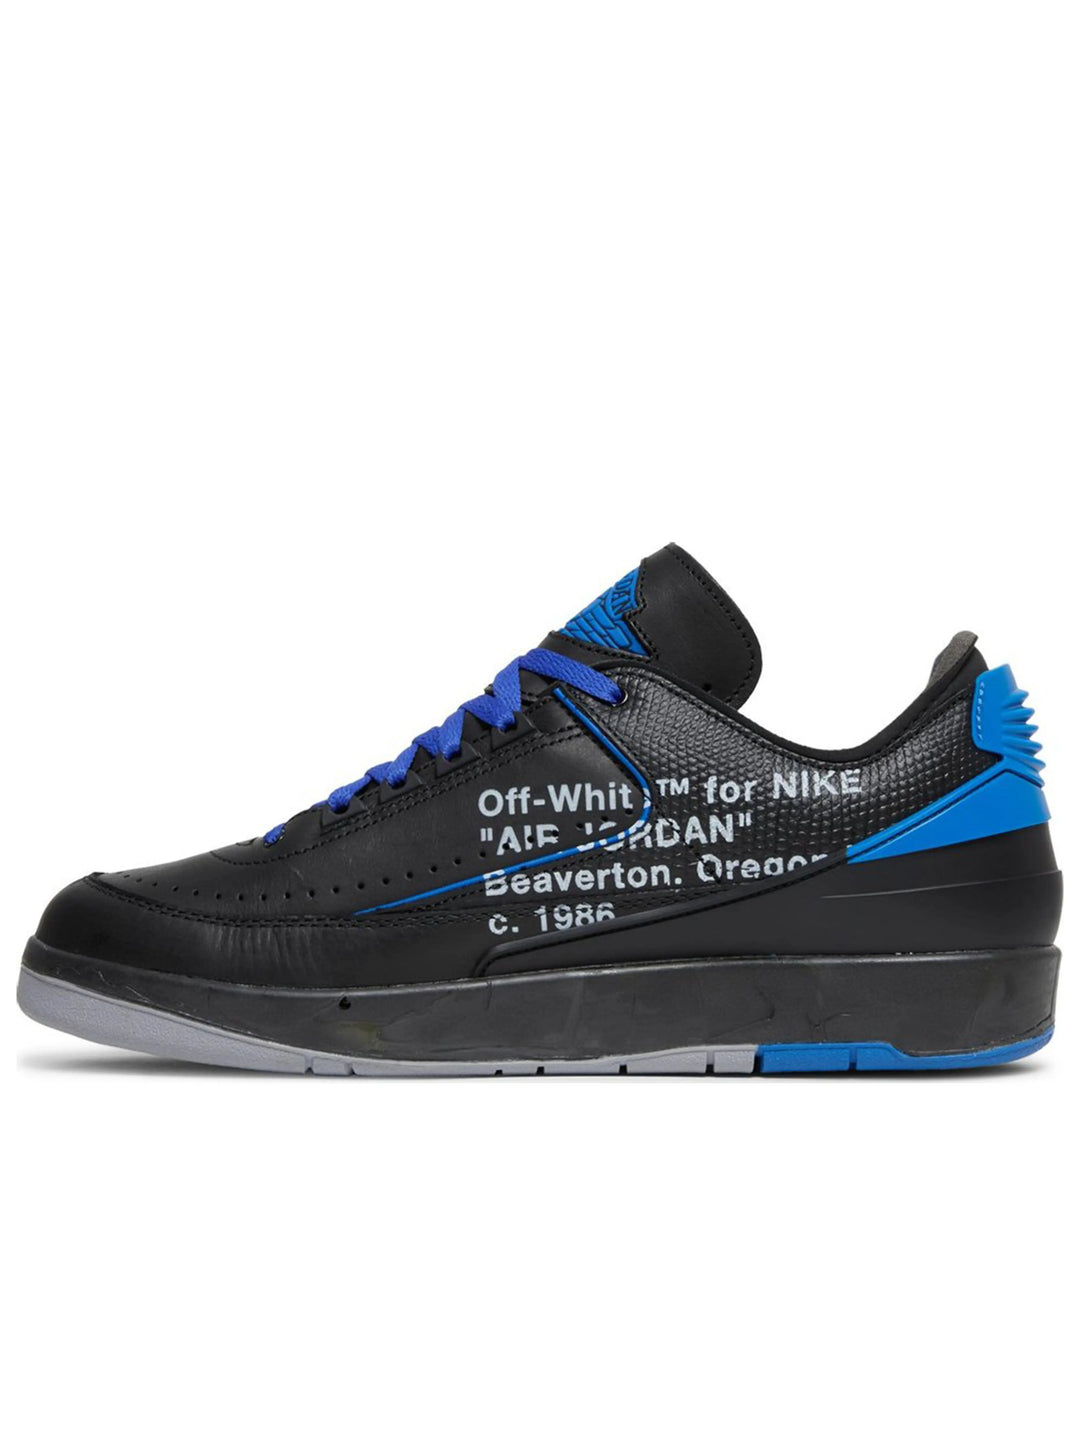 Nike Air Jordan 2 Retro Low SP Off-White Black Blue Prior